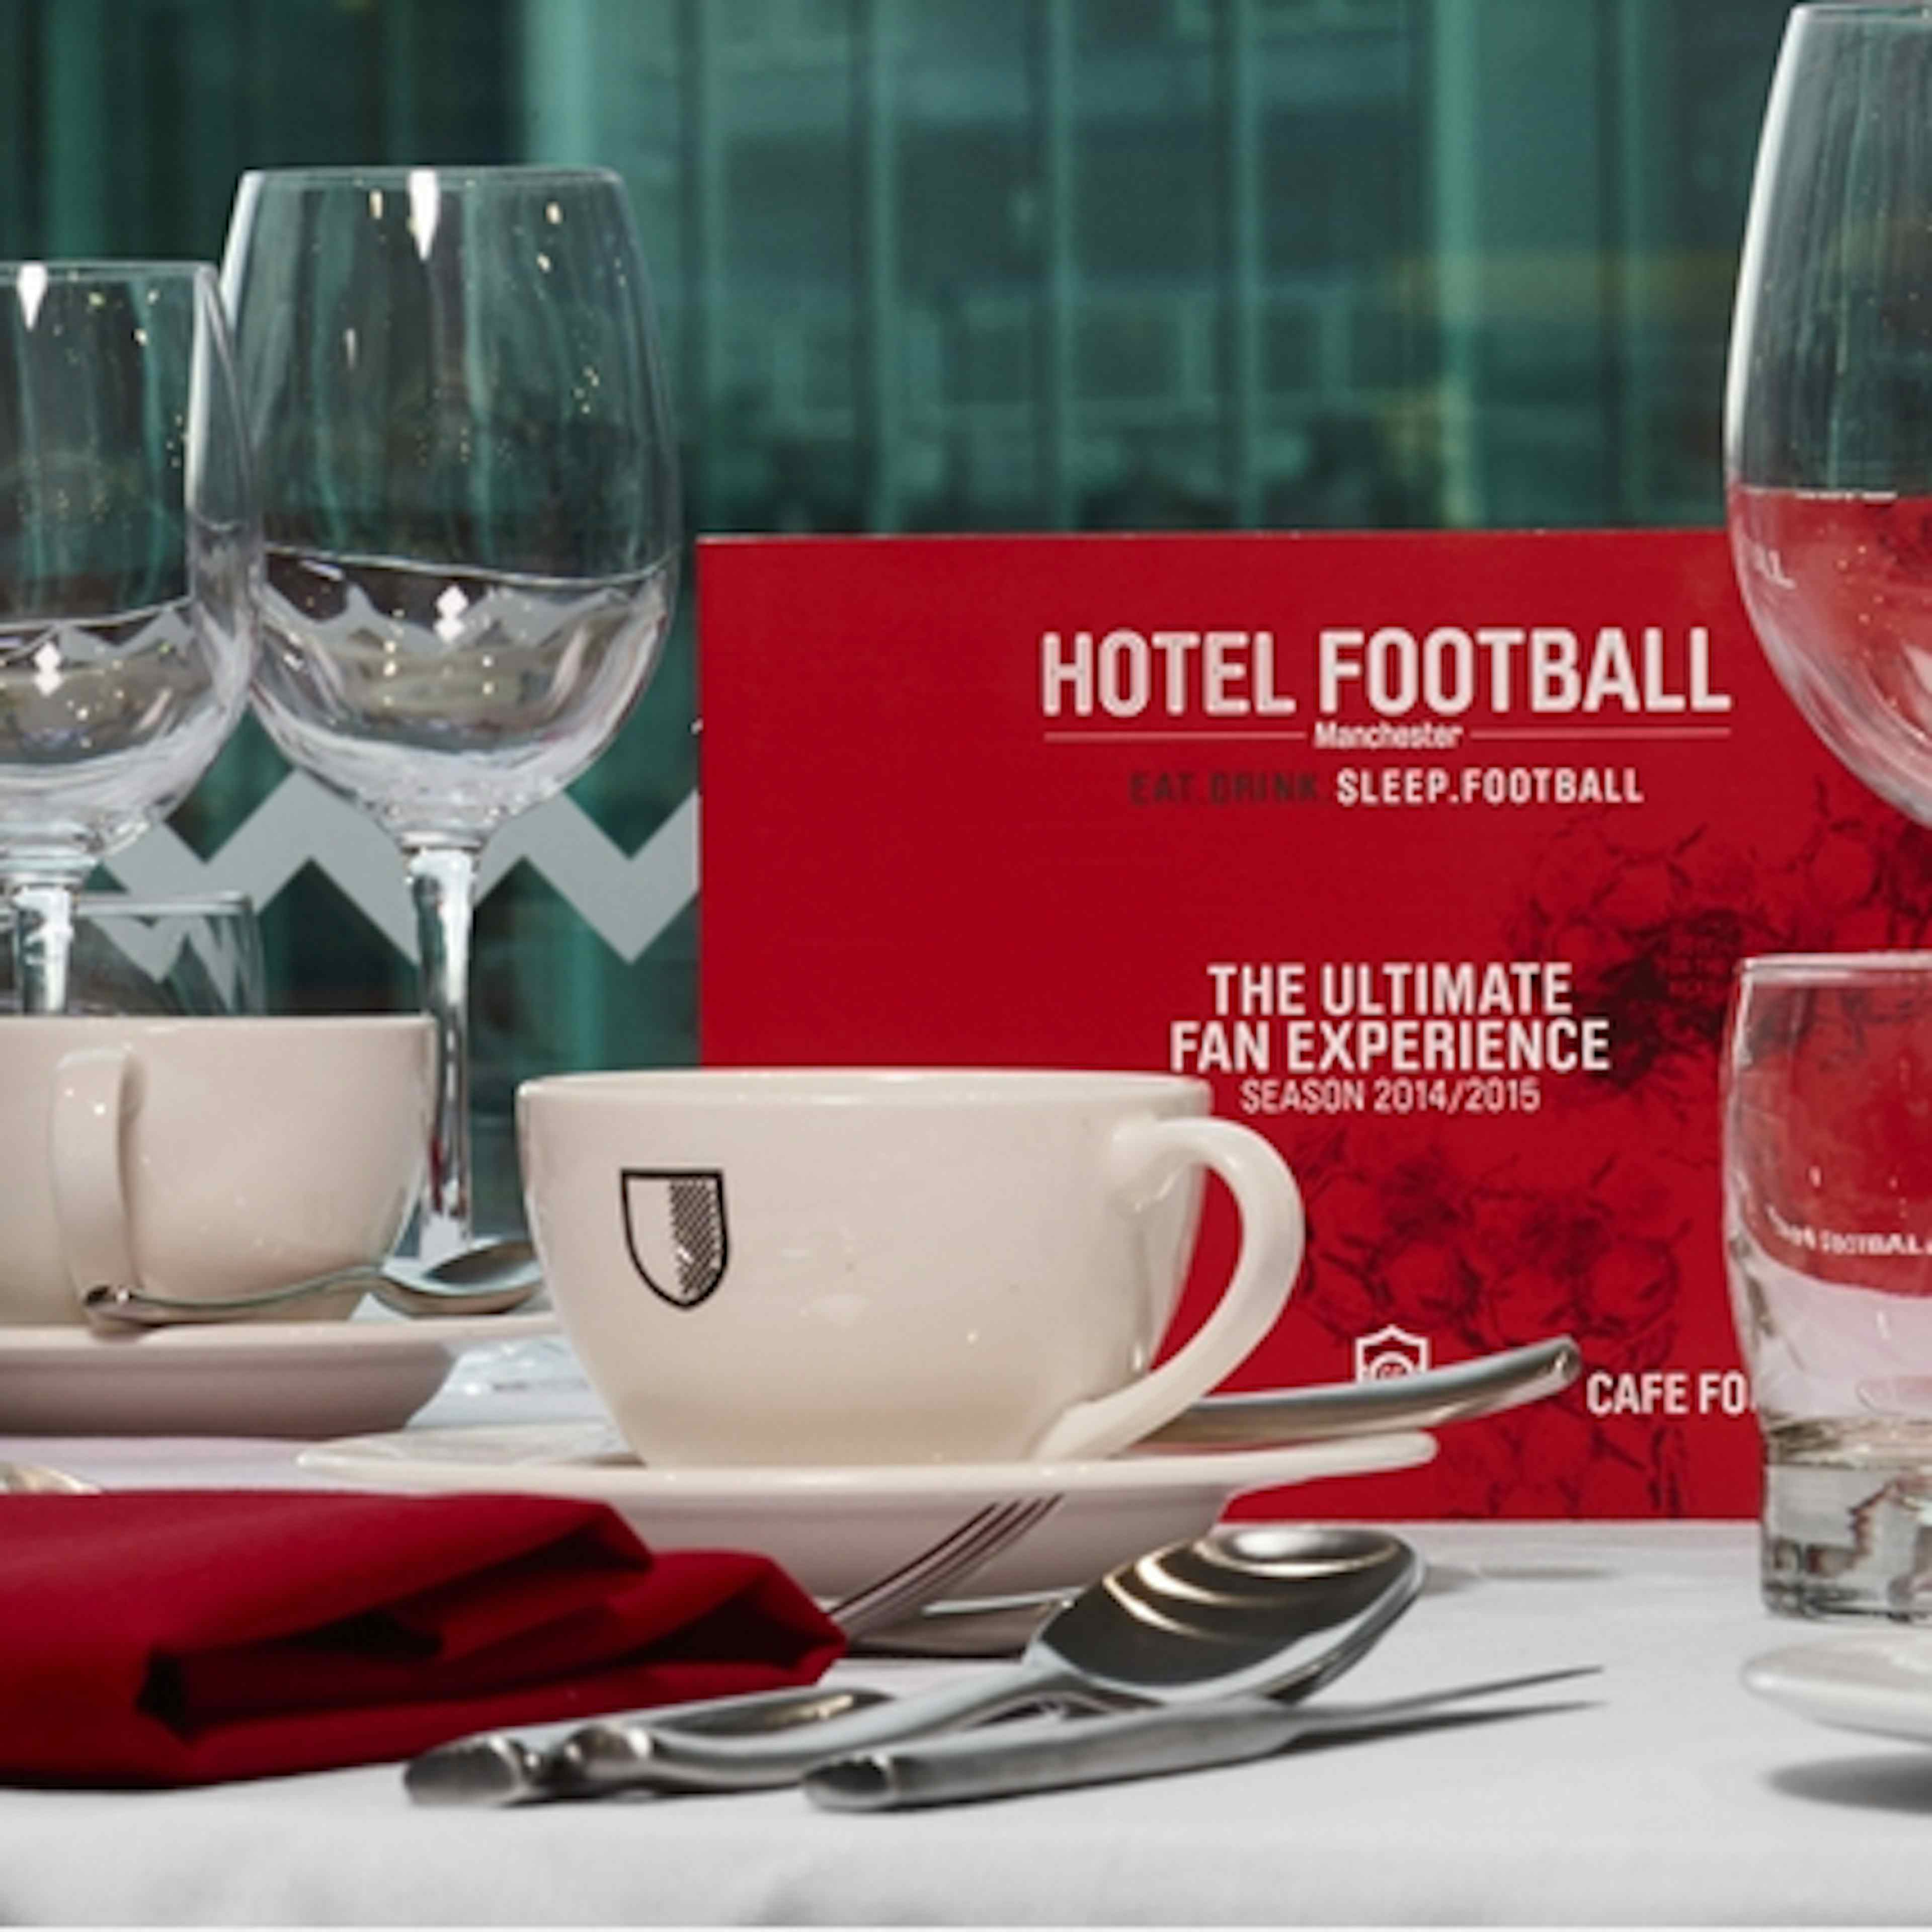 Hotel Football - image 3